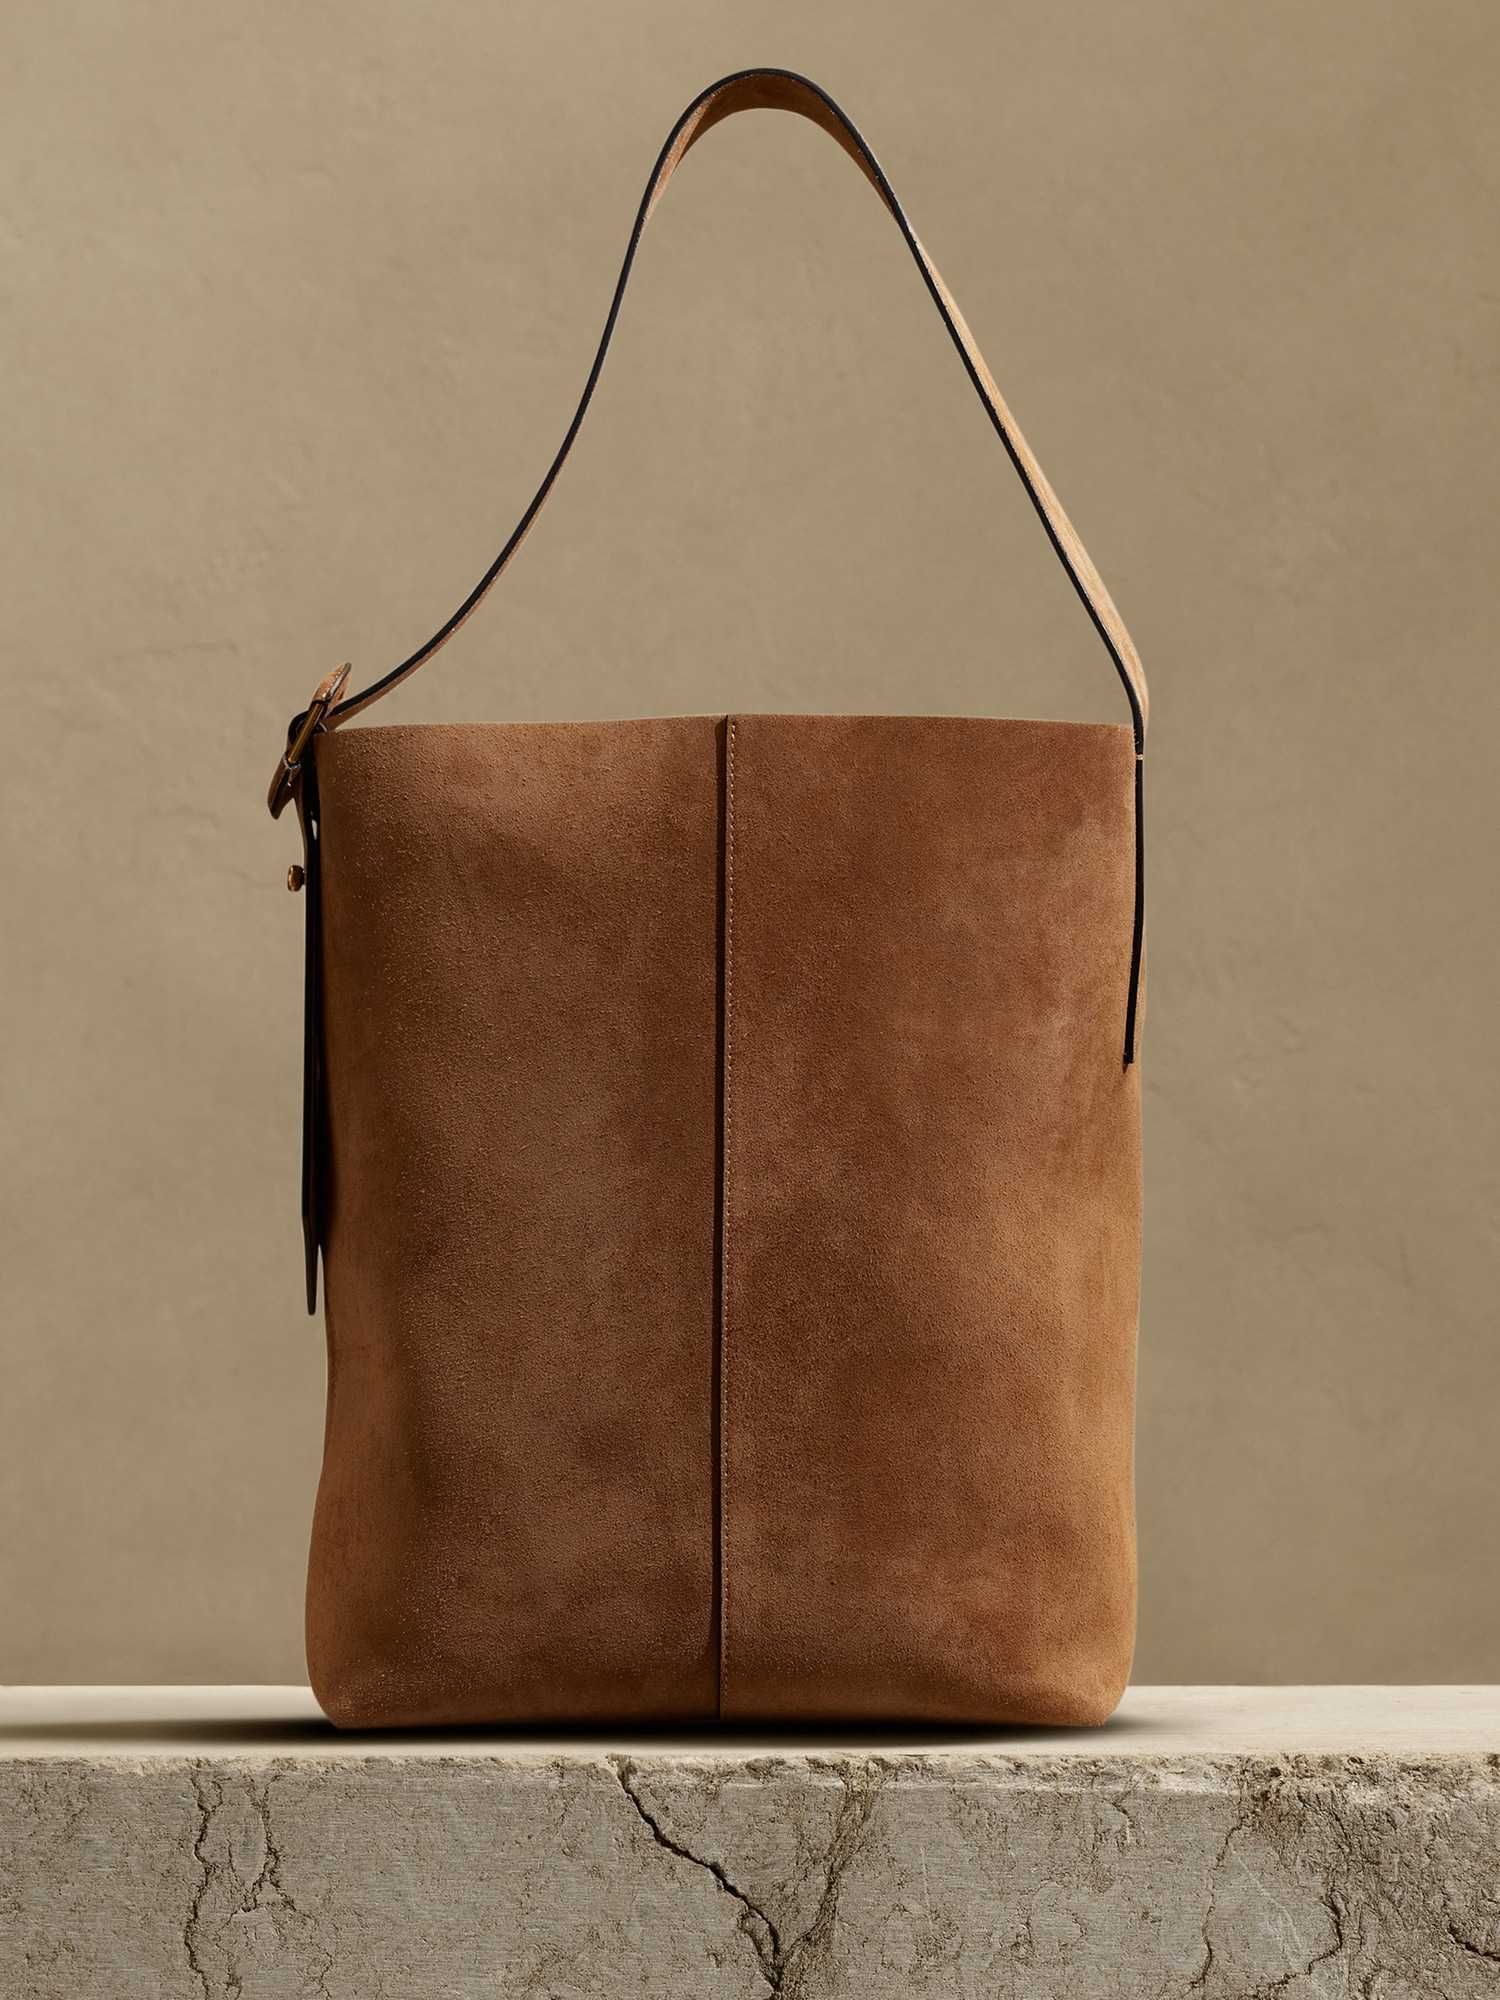 BEST Designer Tote Bags for Work: 8 Chic Picks